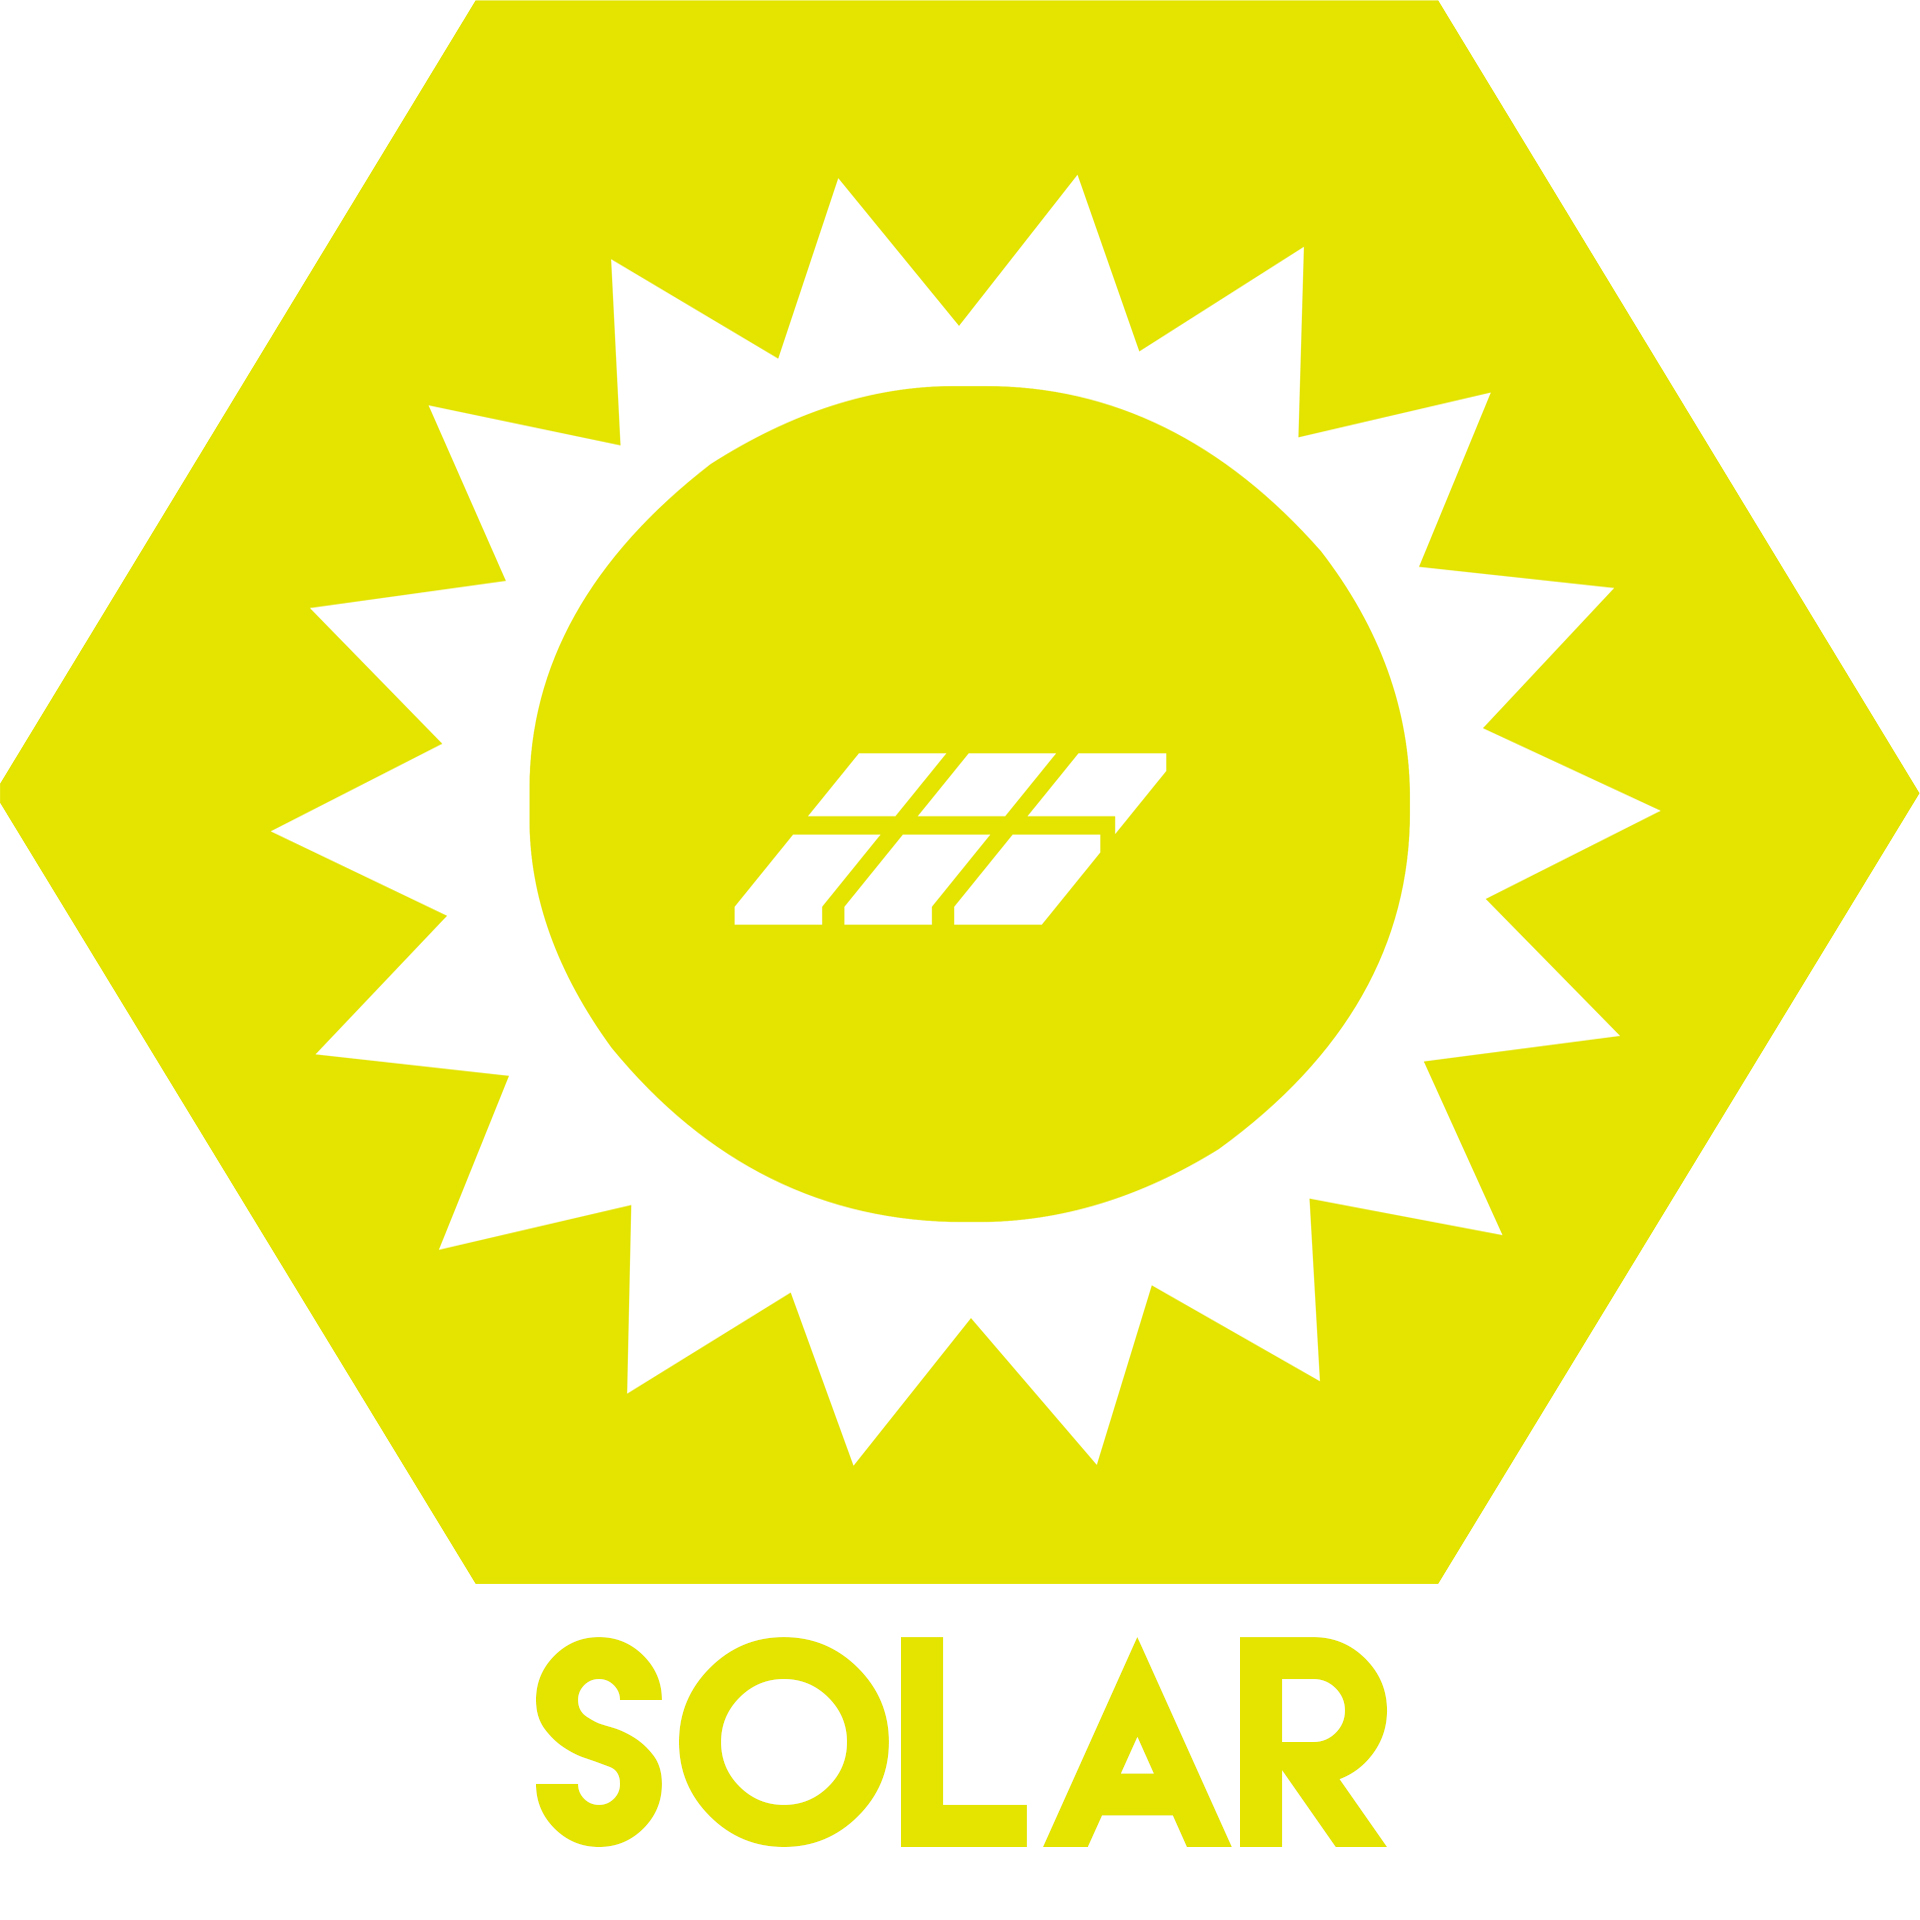 REMap-SOLAR logo